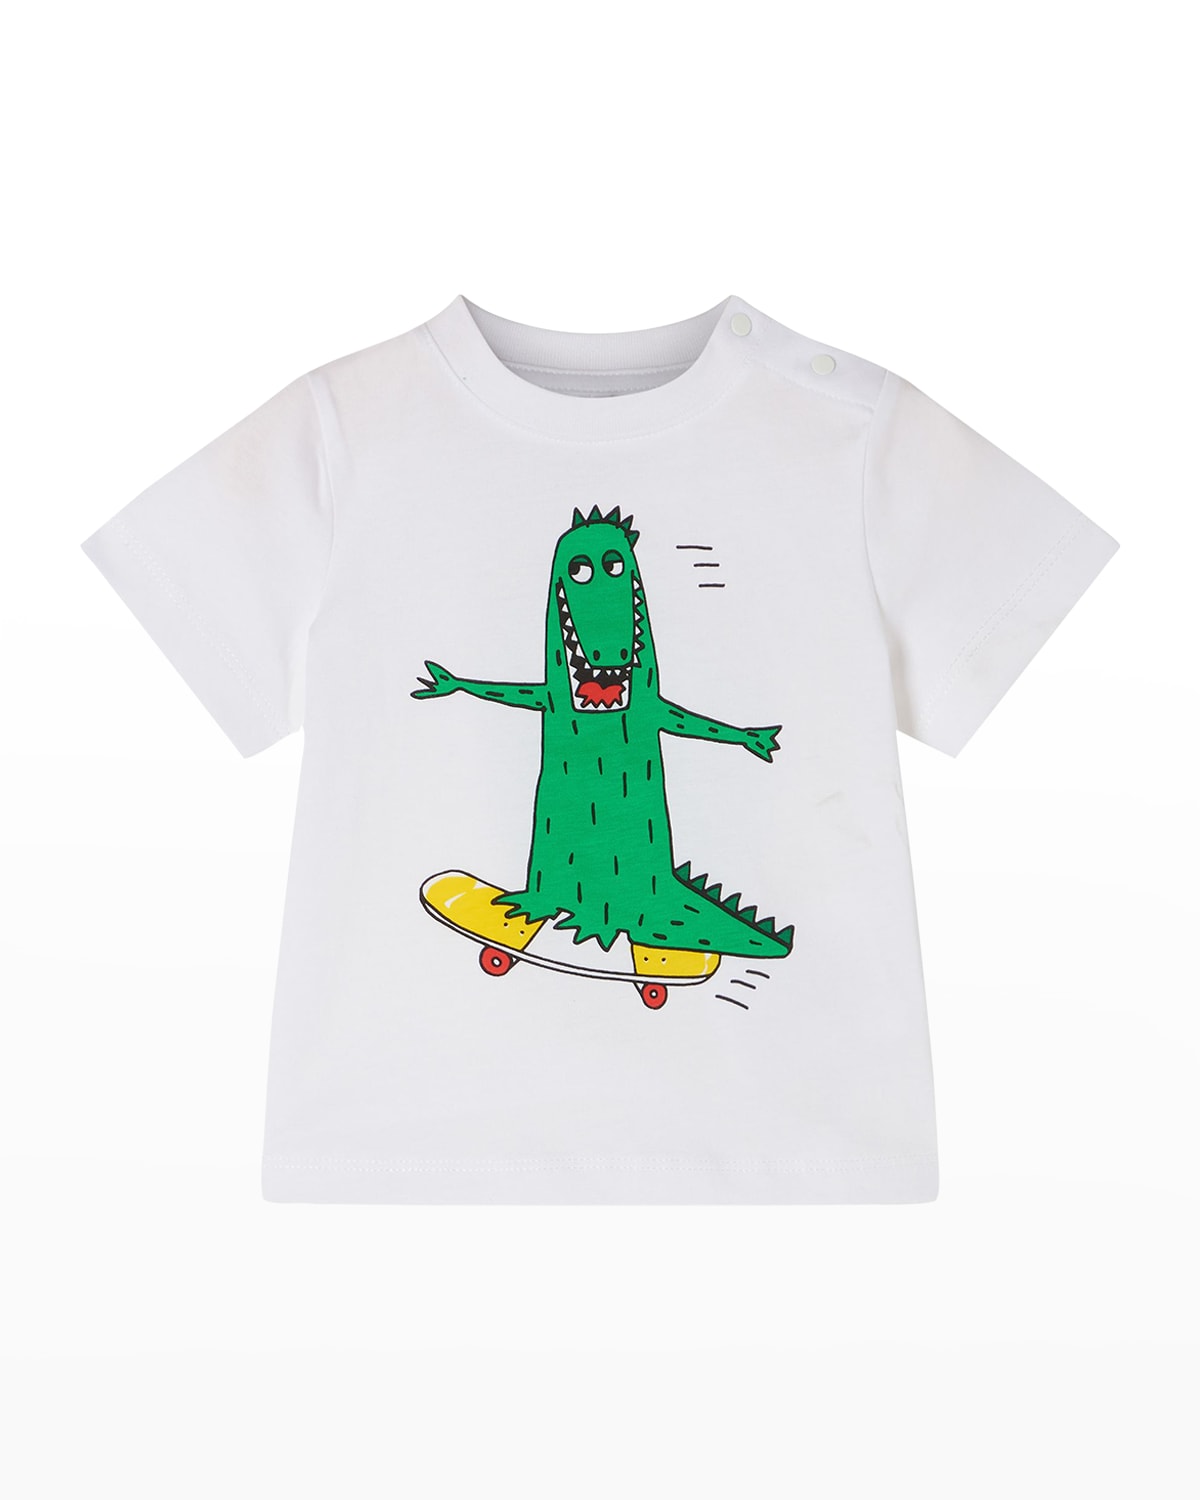 Boy's Crocodile Graphic-Print Jersey Tee, Size 6M-36M